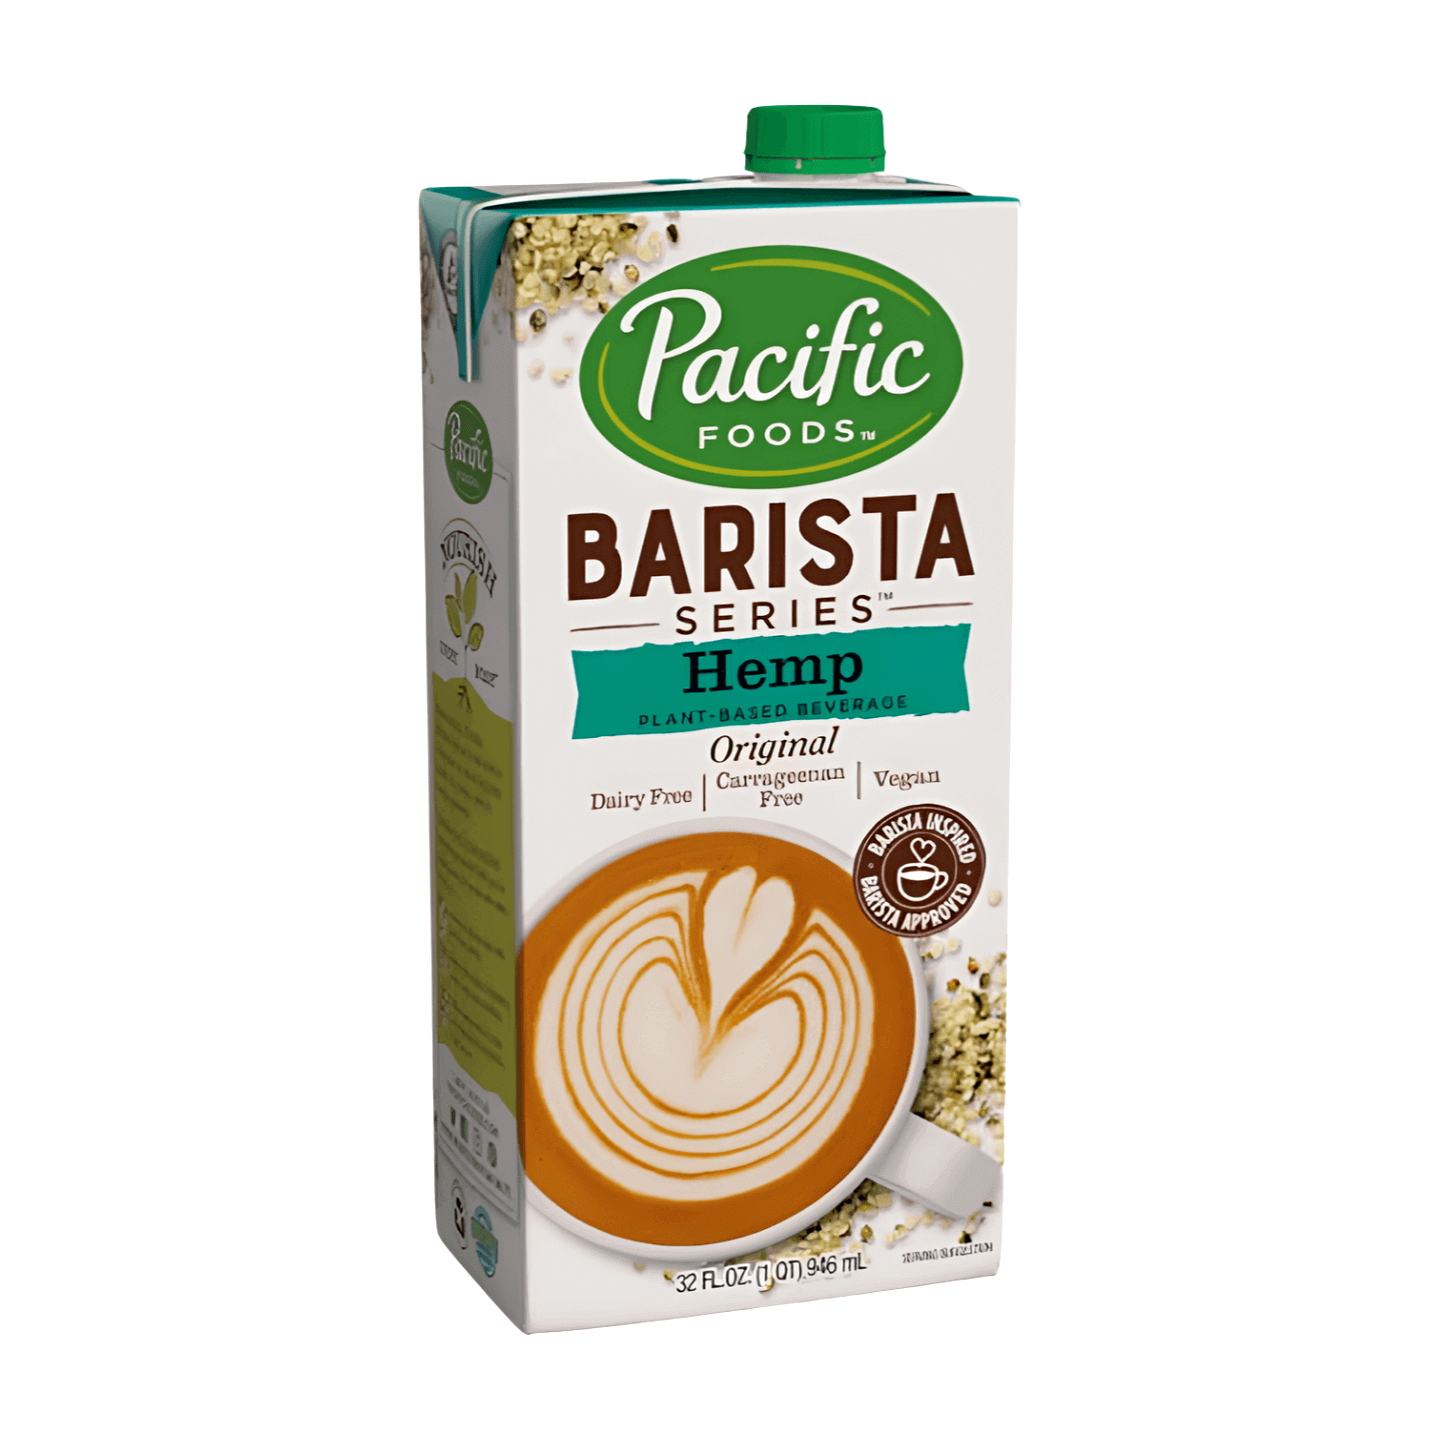 Pacific Foods Barista Series Hemp Original